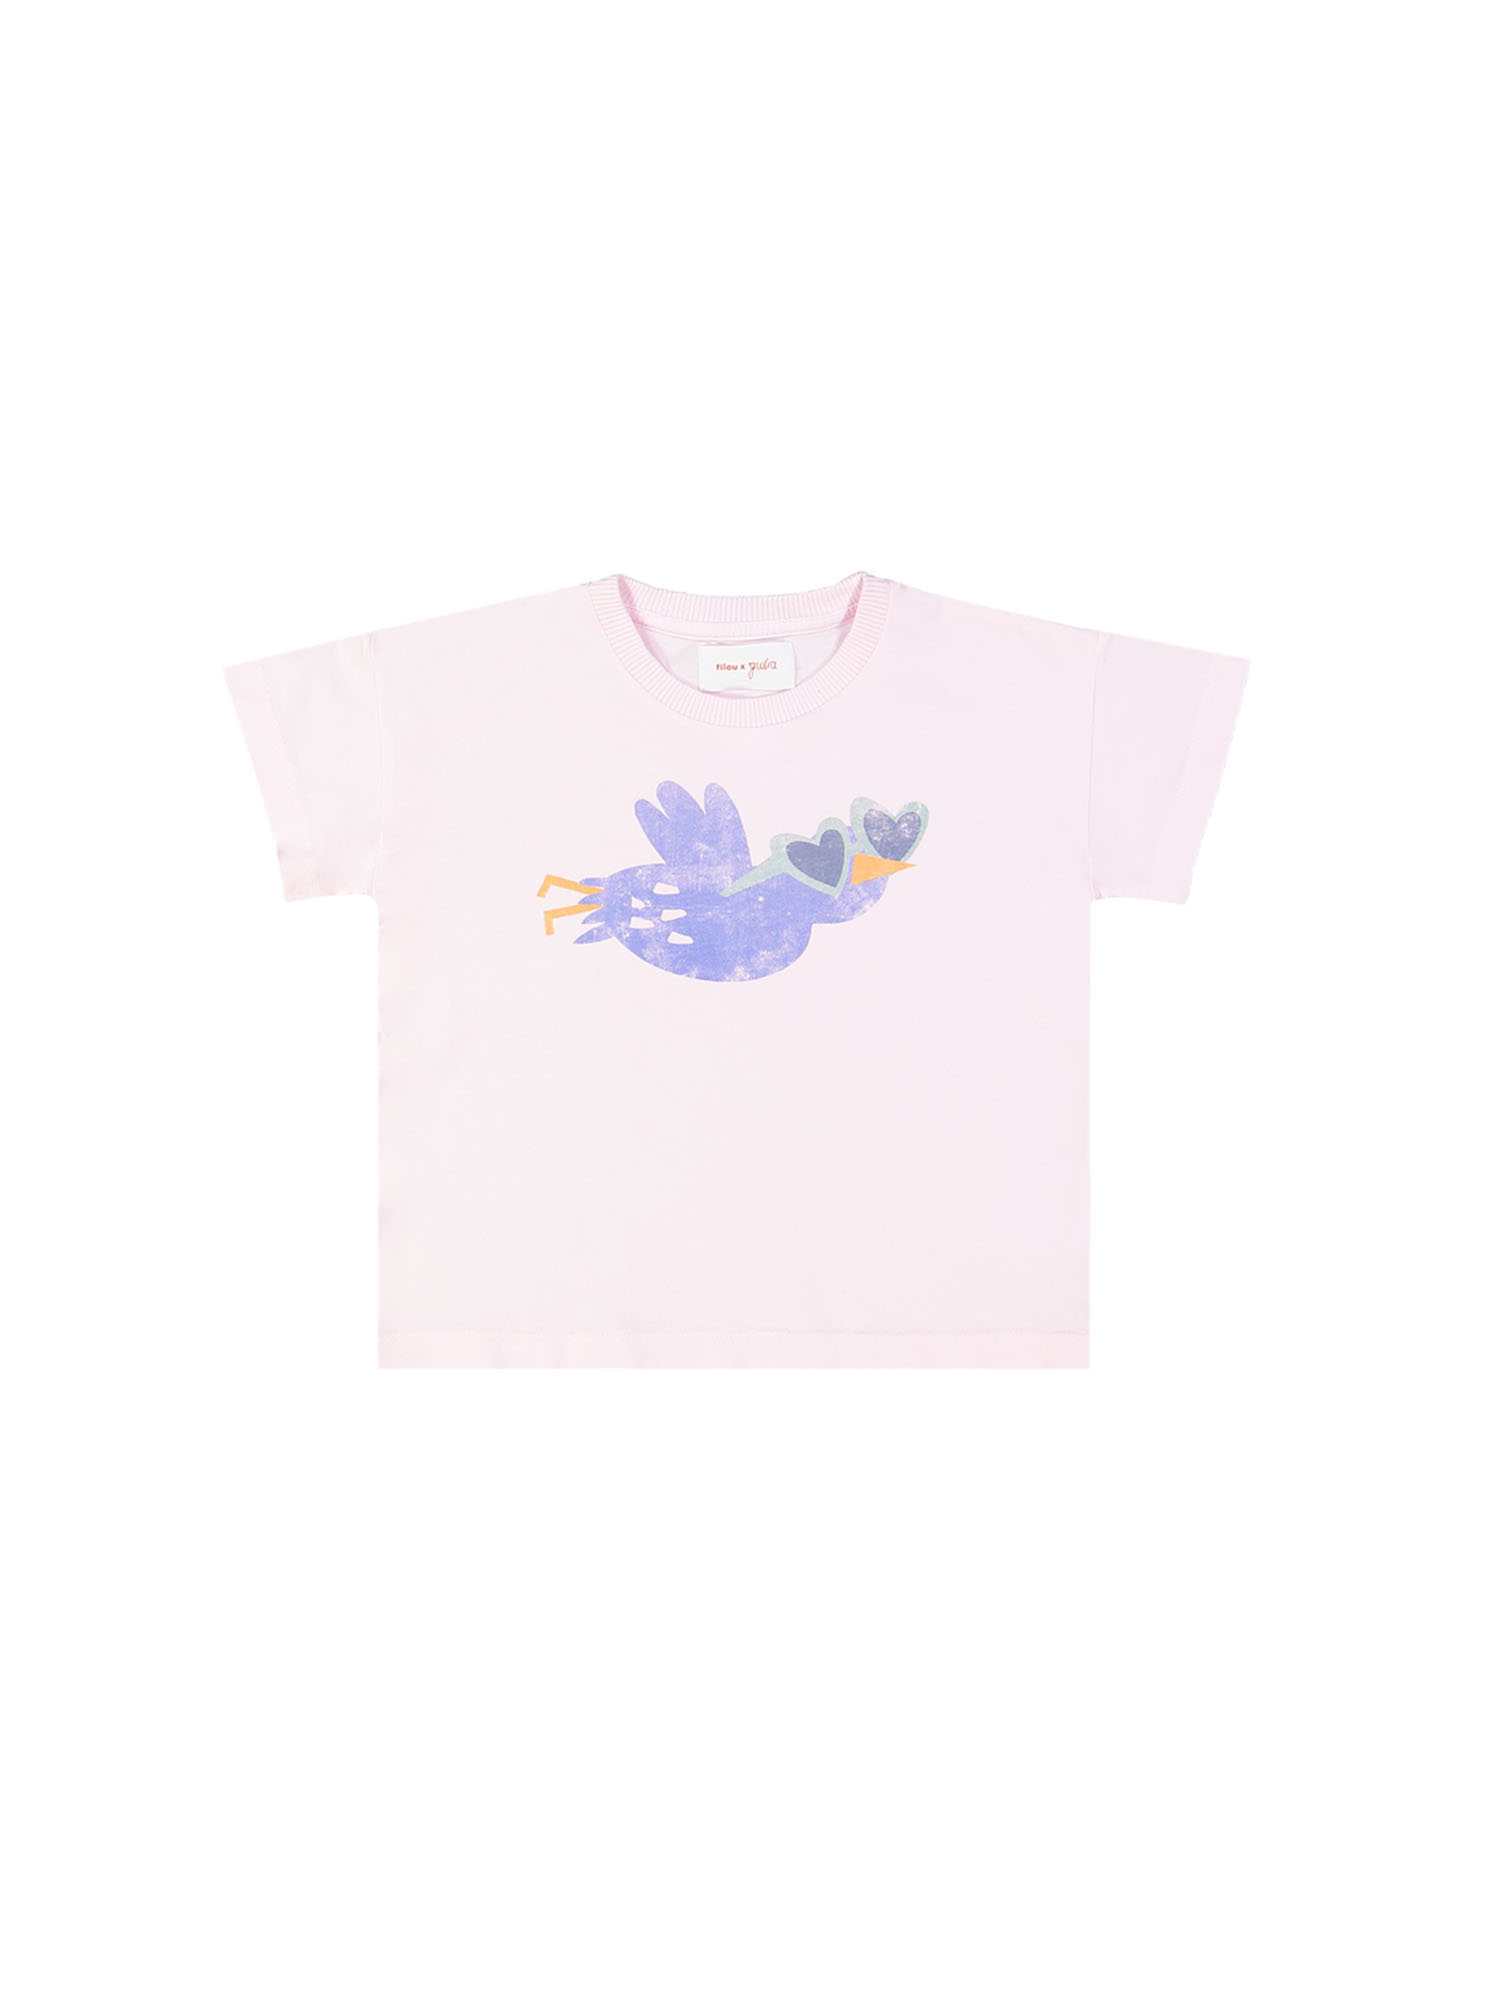 t-shirt birdheart lichtroze 02j-03j